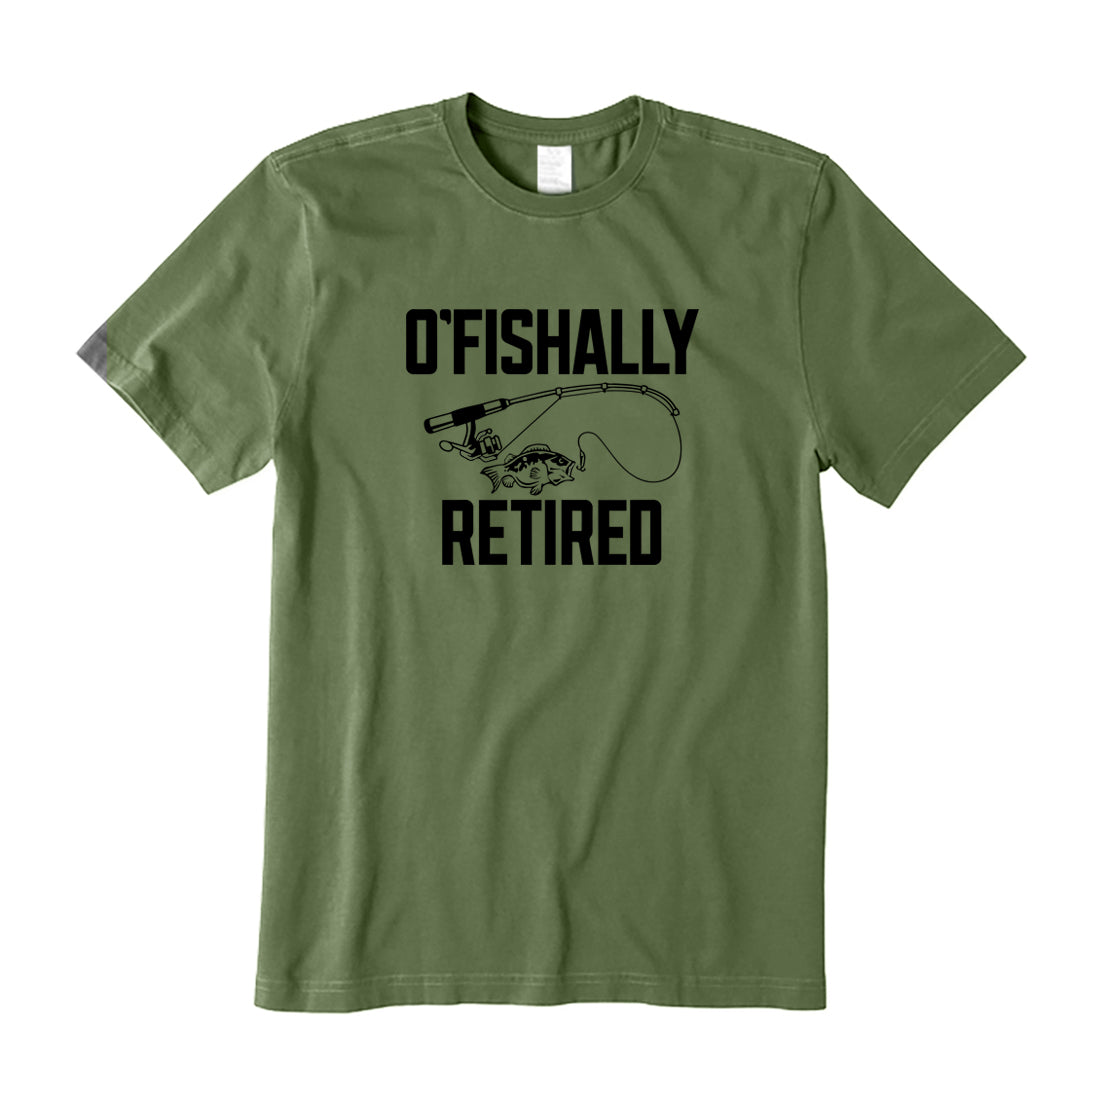 O'fishally Retired T-Shirt